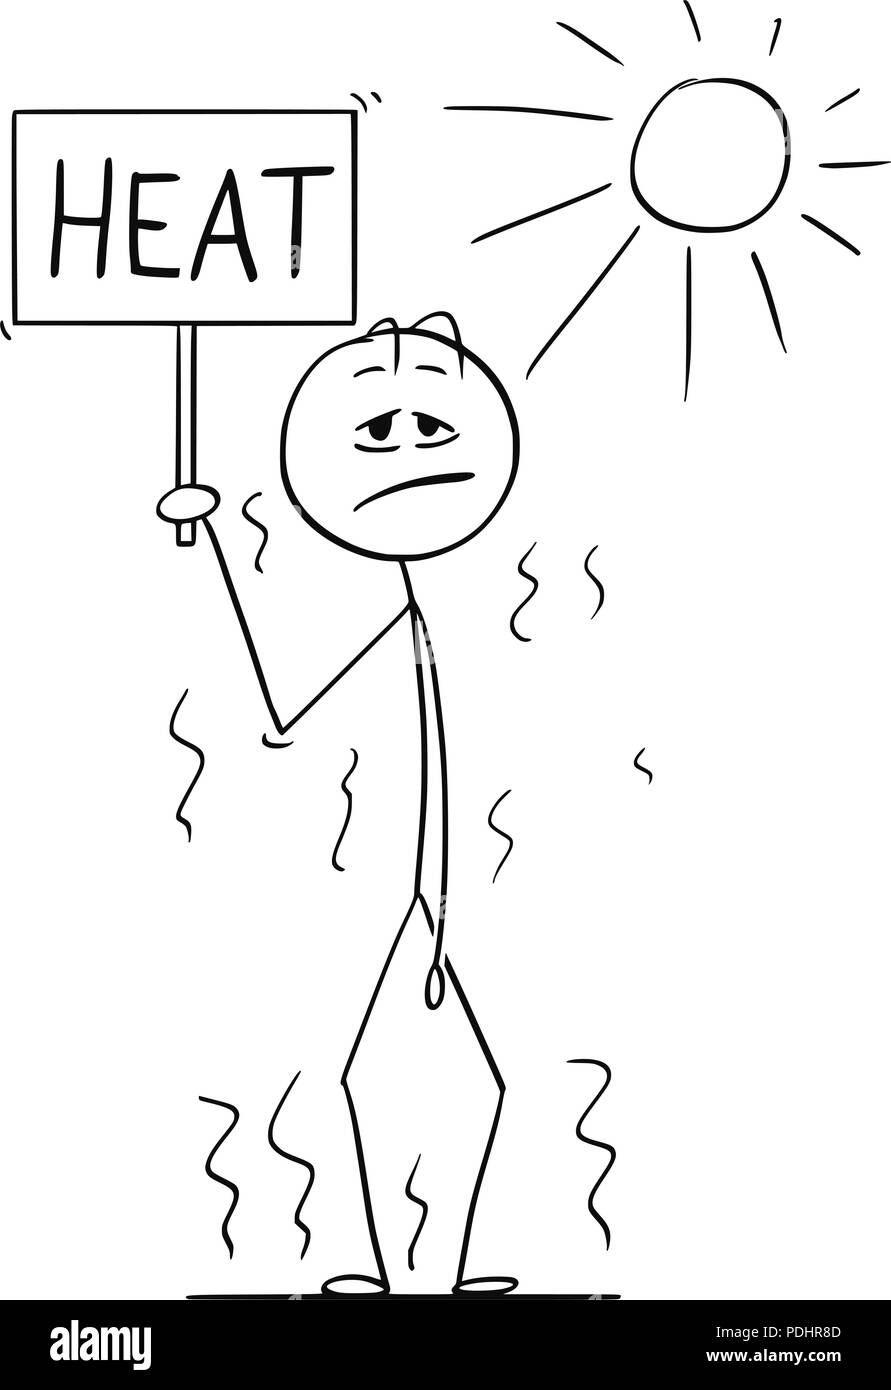 Cartoon of Man Standing in Hot Summer With Heat Sign in Hand Stock Vector